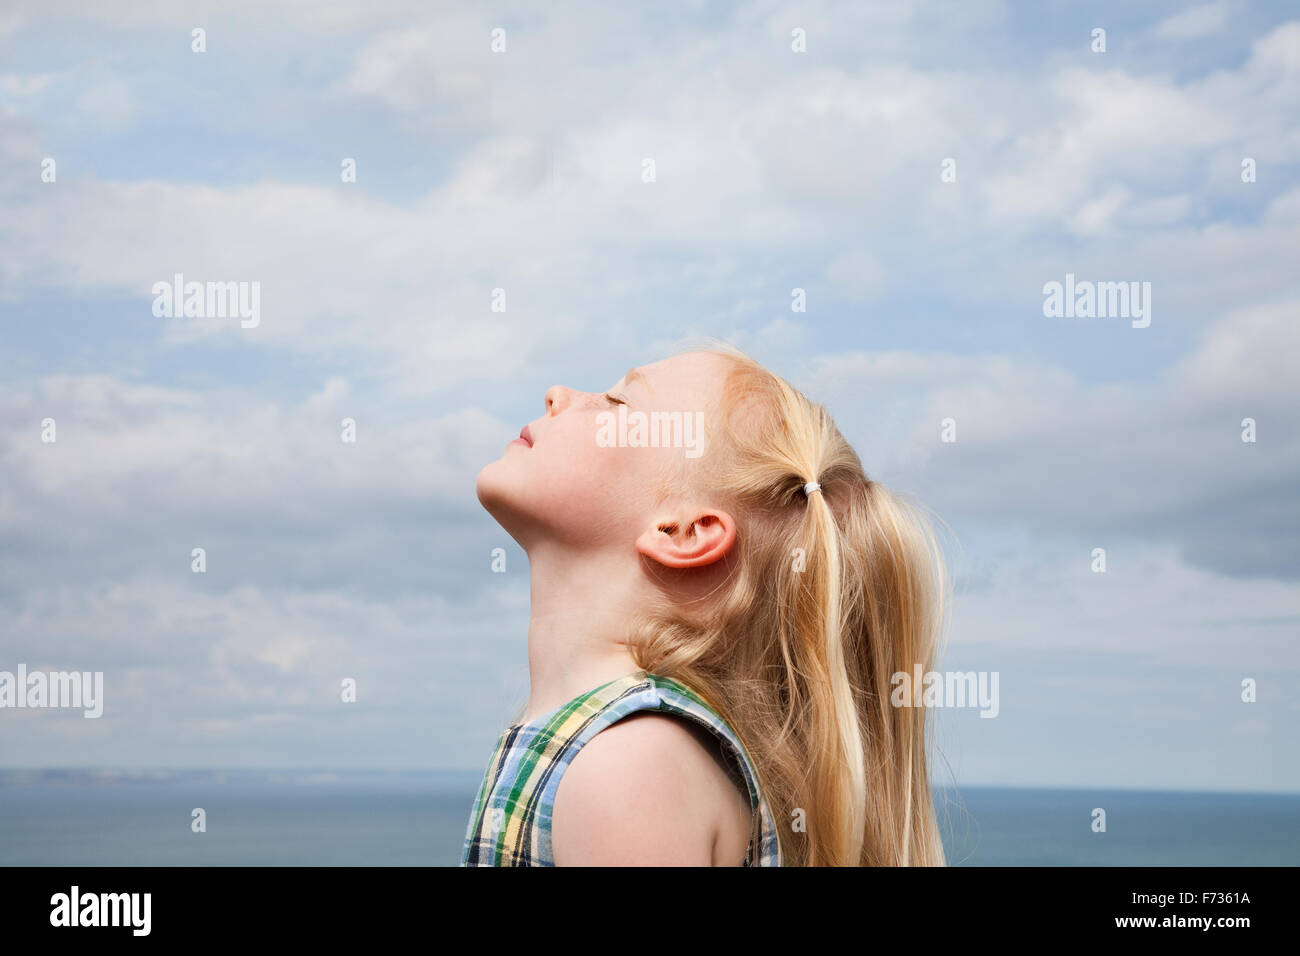 A young girl raising her face to the sun. Stock Photo